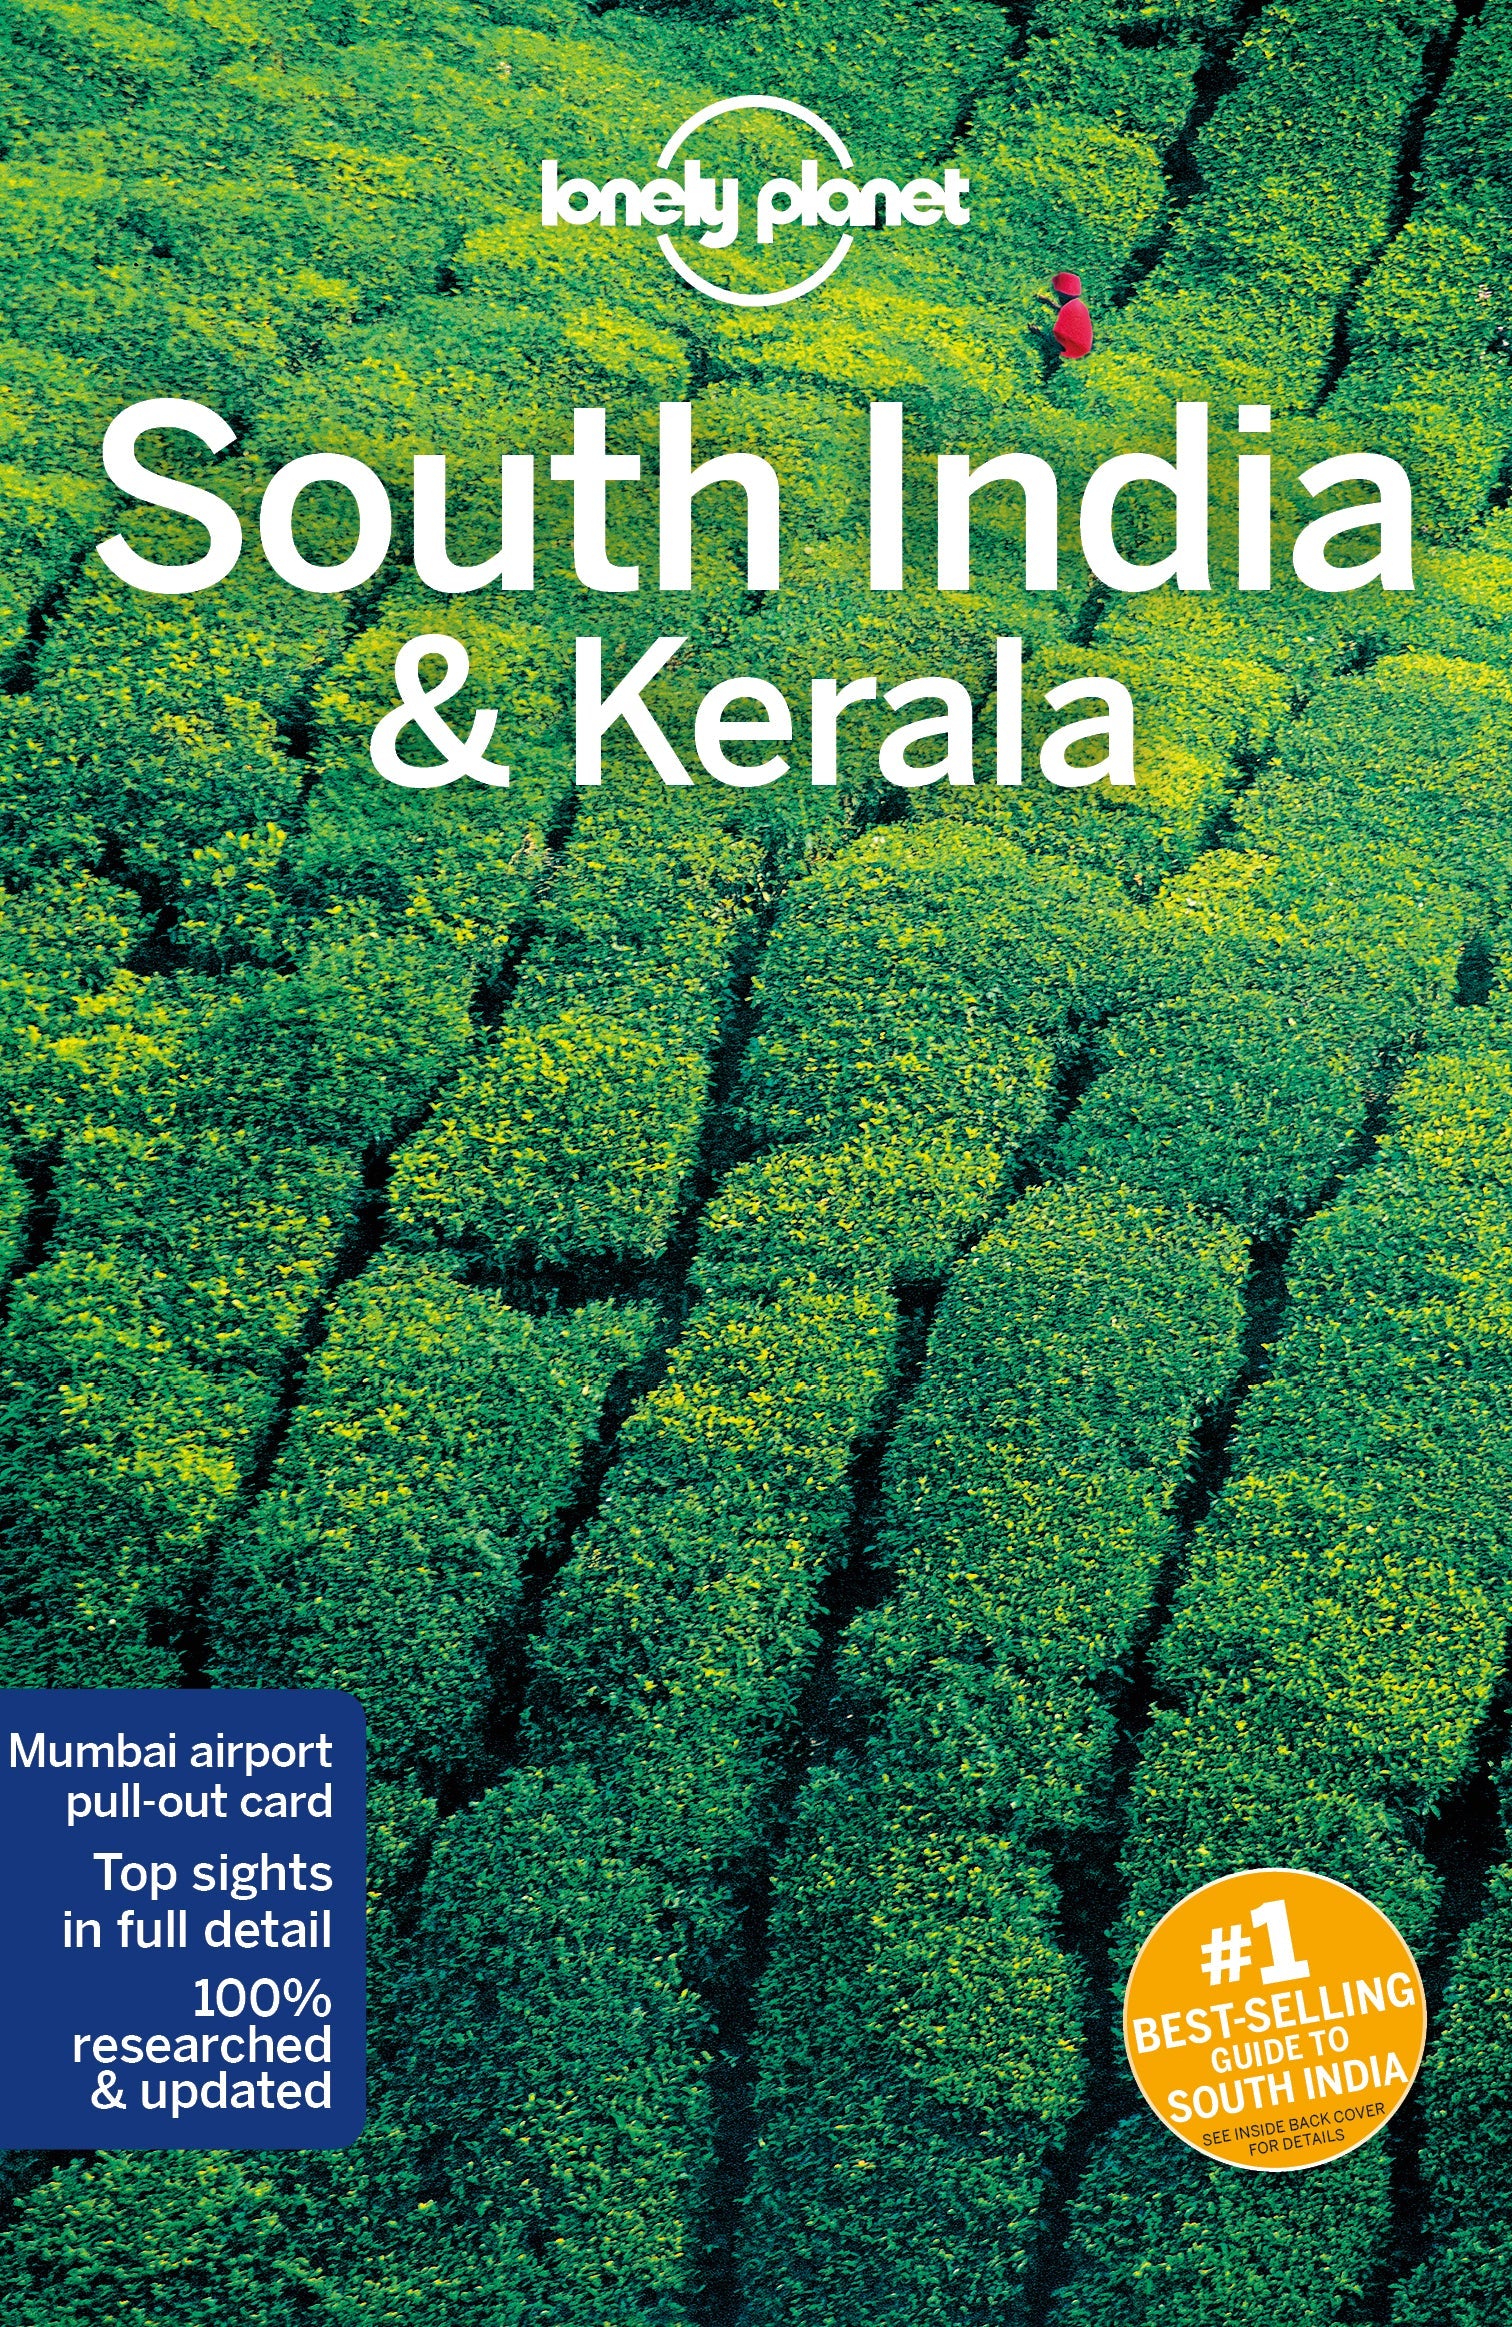 South India & Kerala travel guide